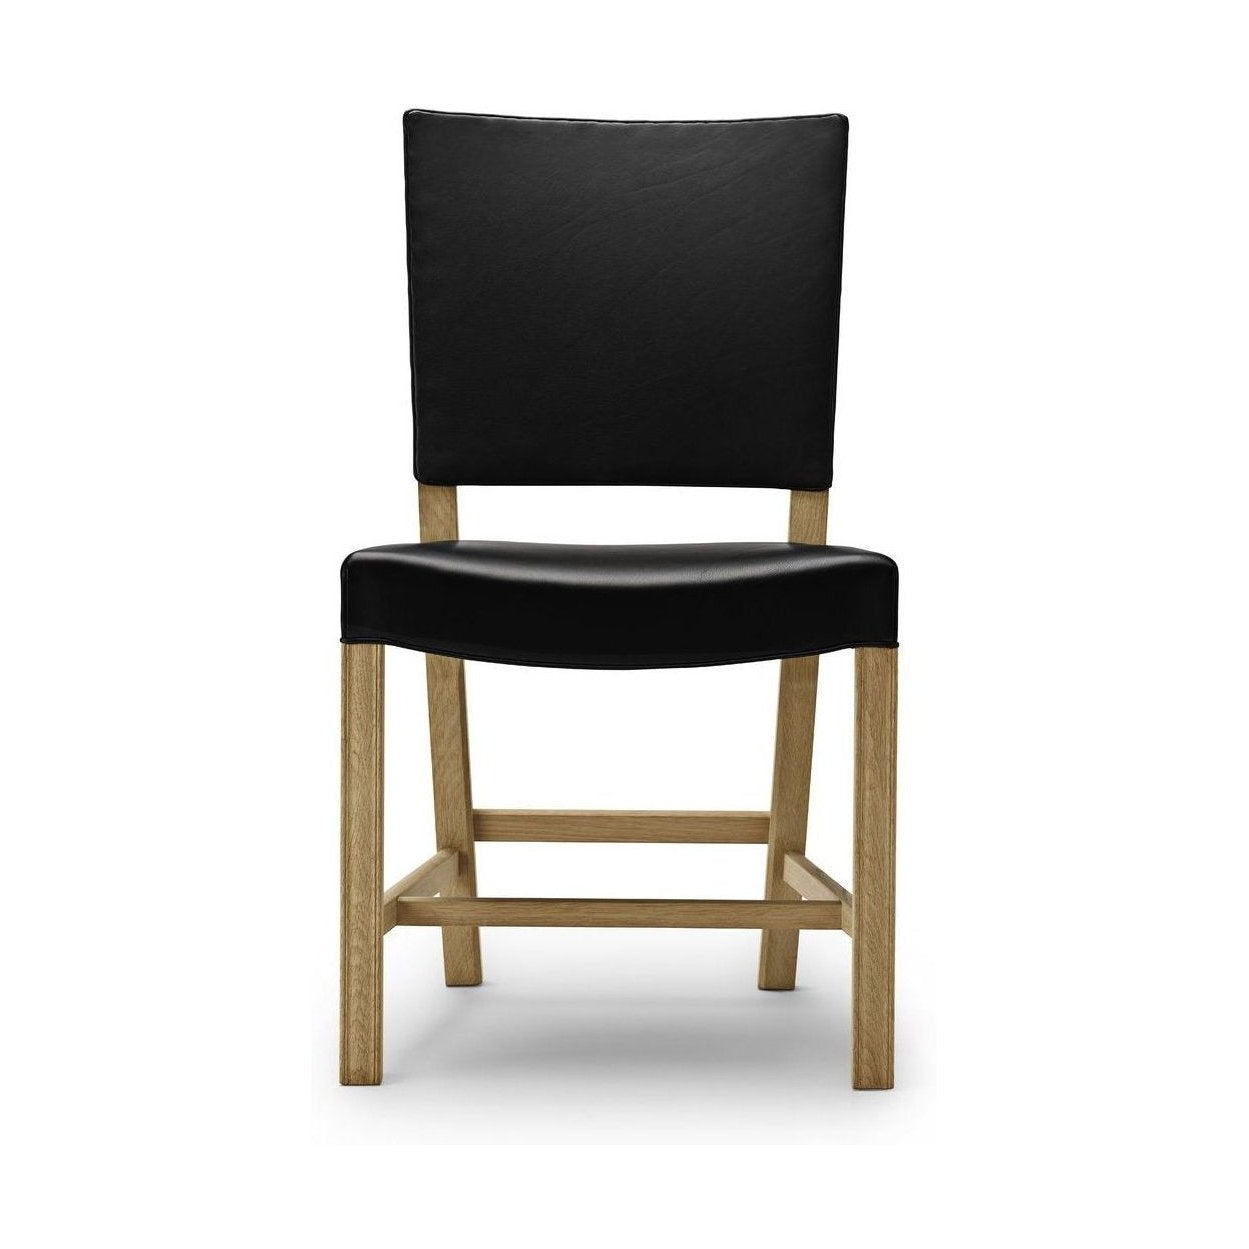 Carl Hansen KK39490 Pequeña silla roja, jabón de roble/cuero negro